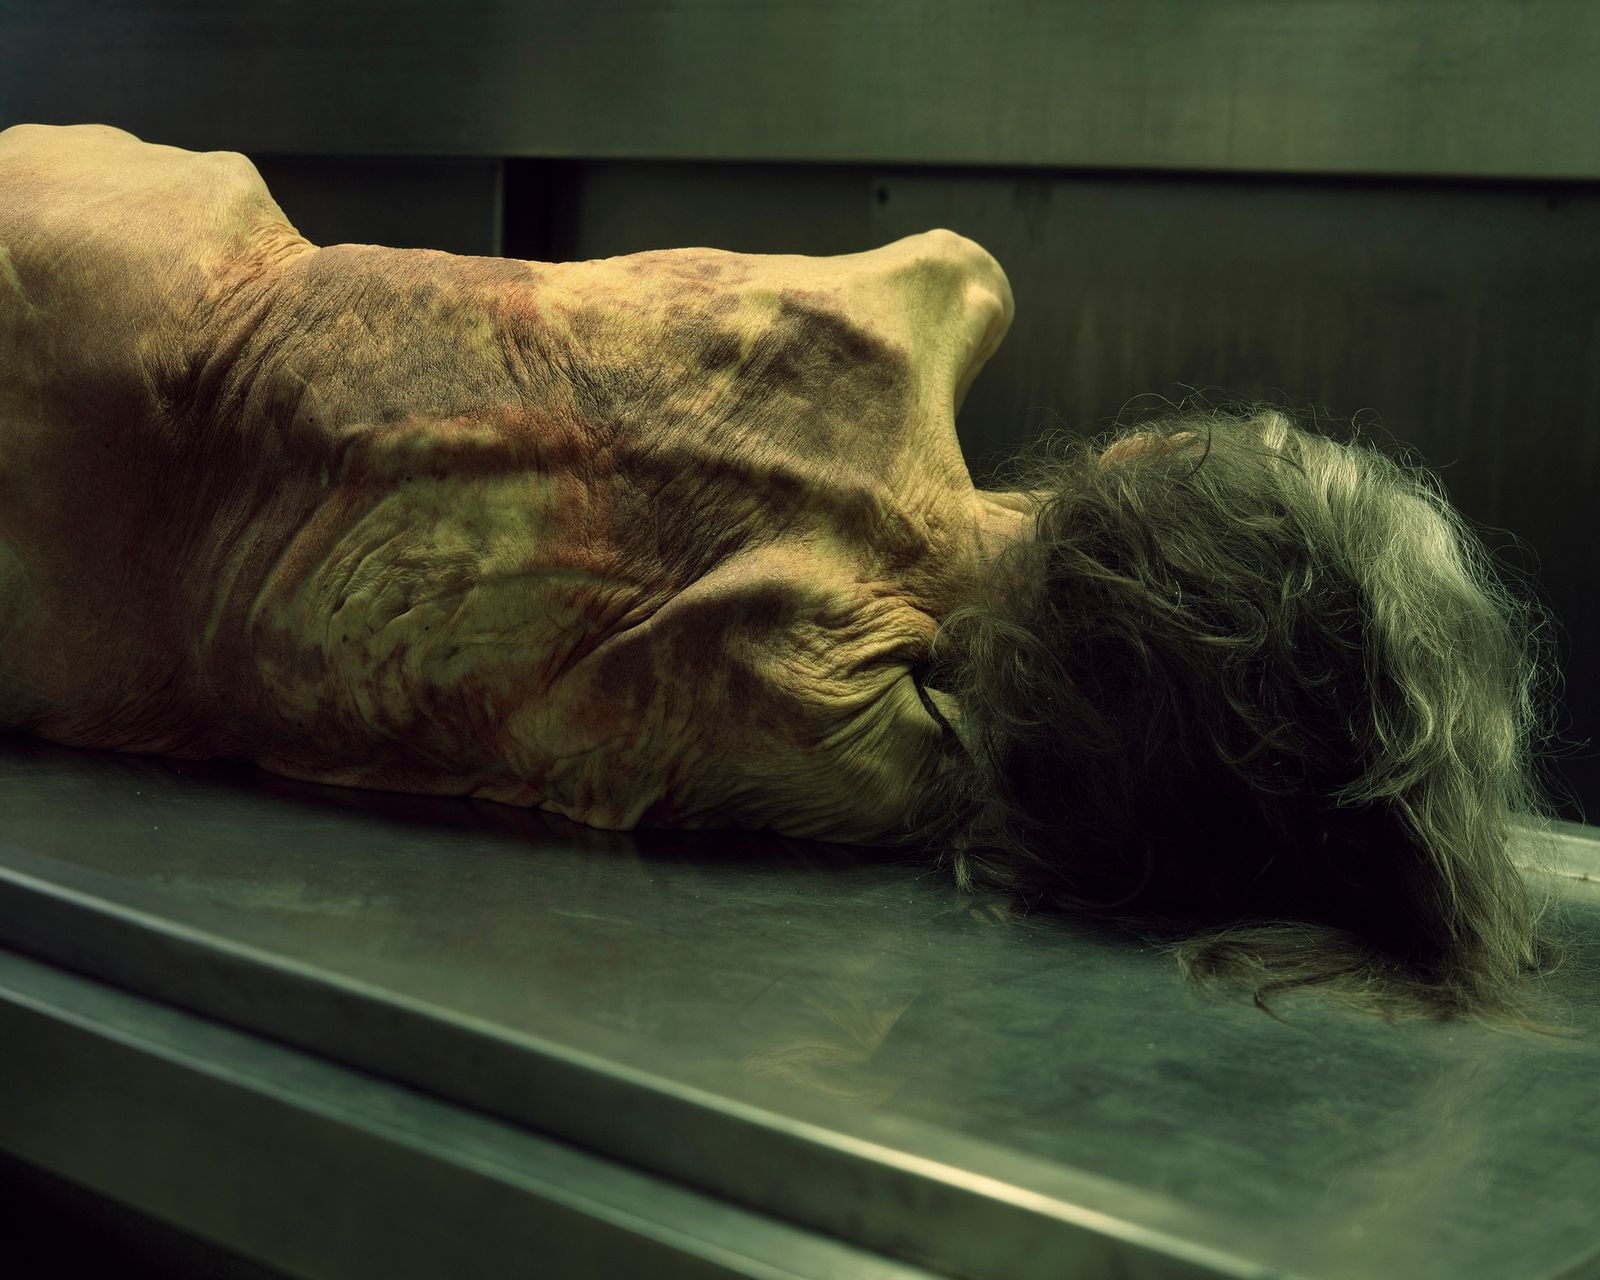 © Grzegorz Wełnicki - Deceased body of a woman, awaiting preparation for burial.